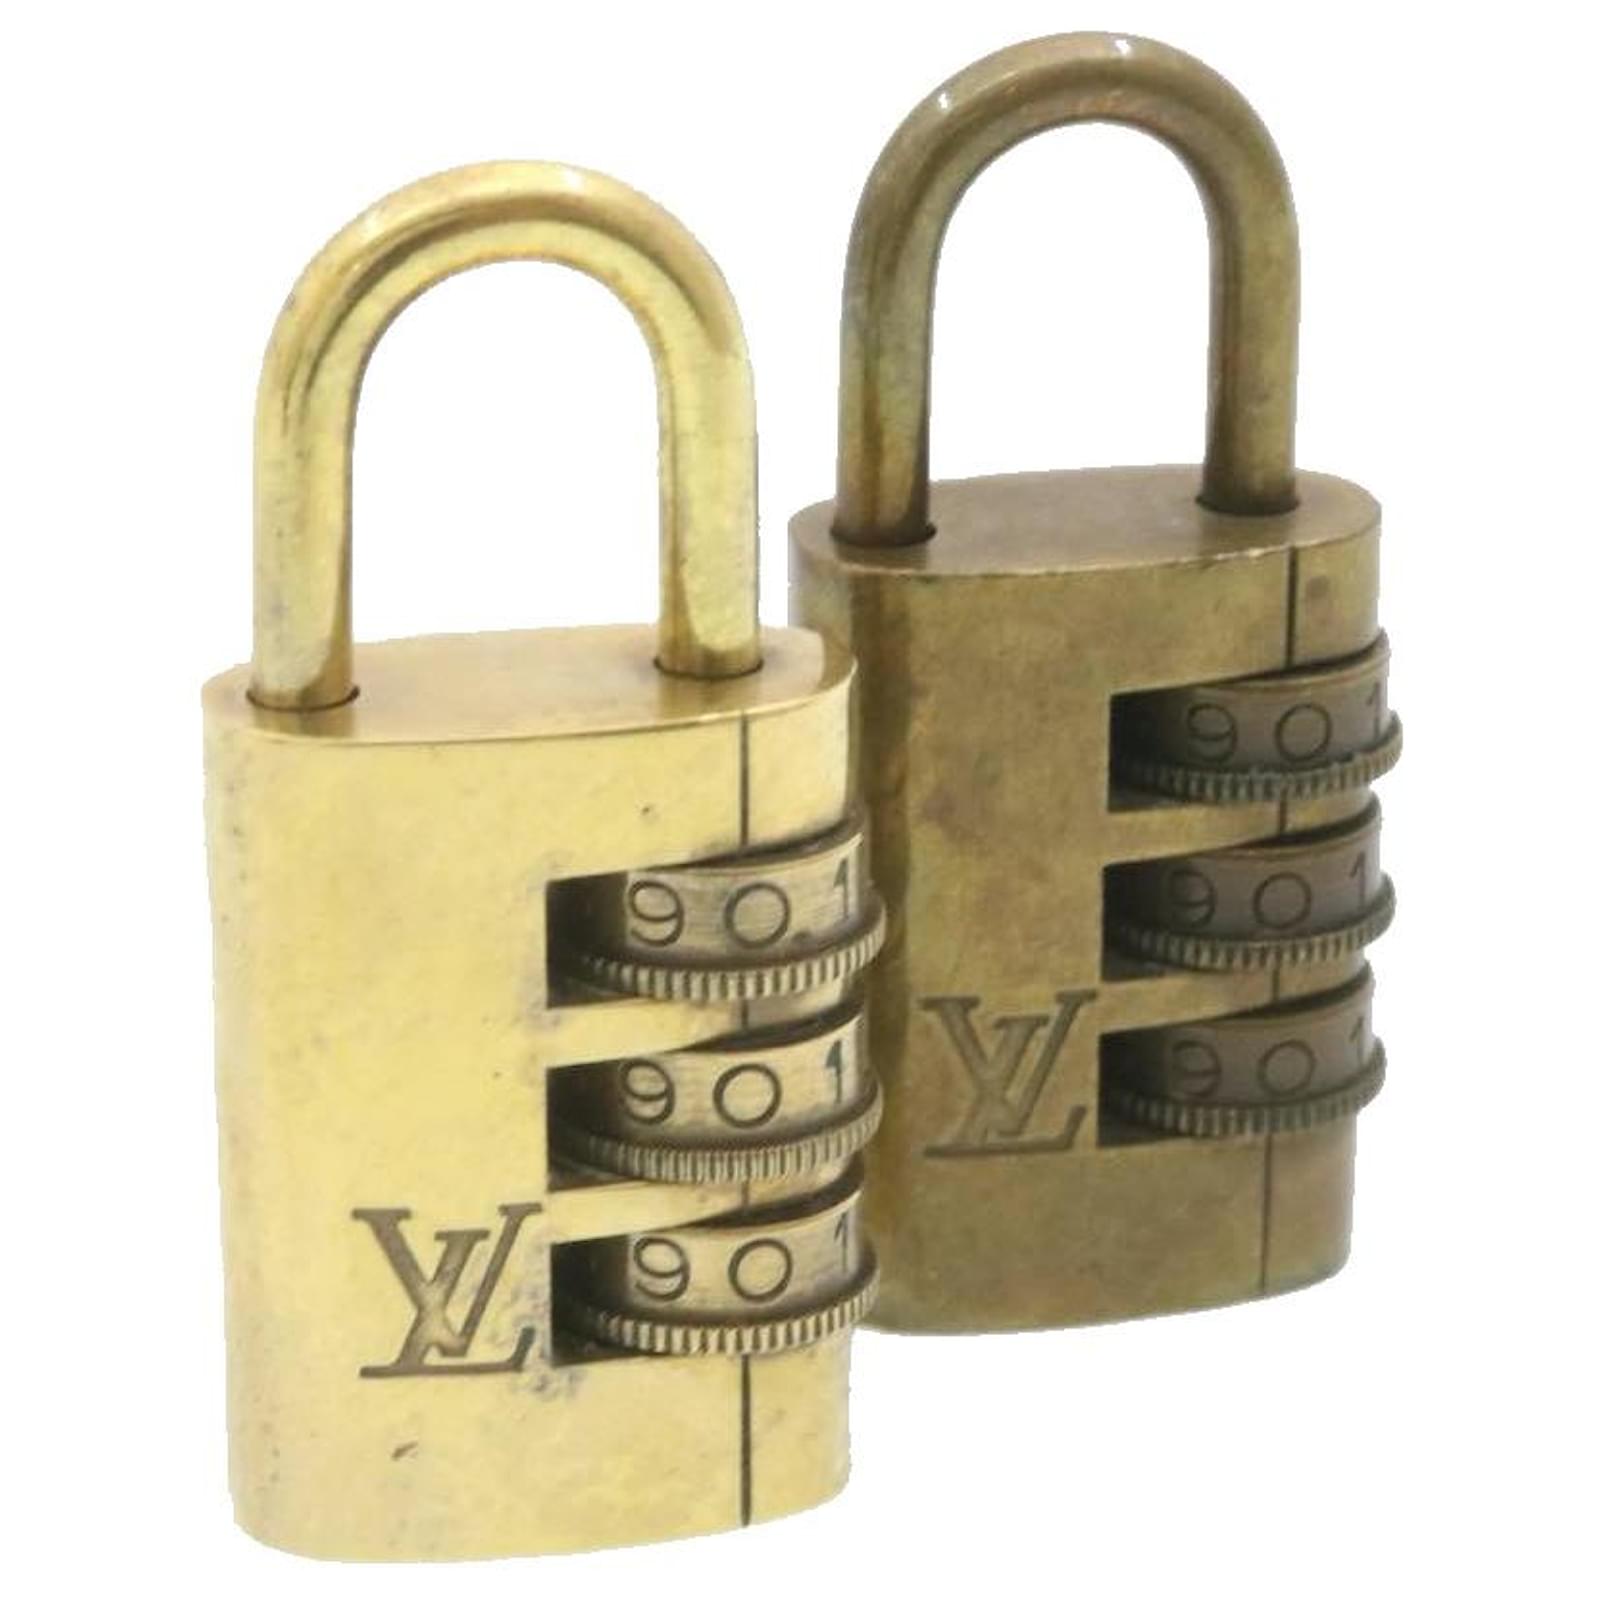 louis vuitton combination lock